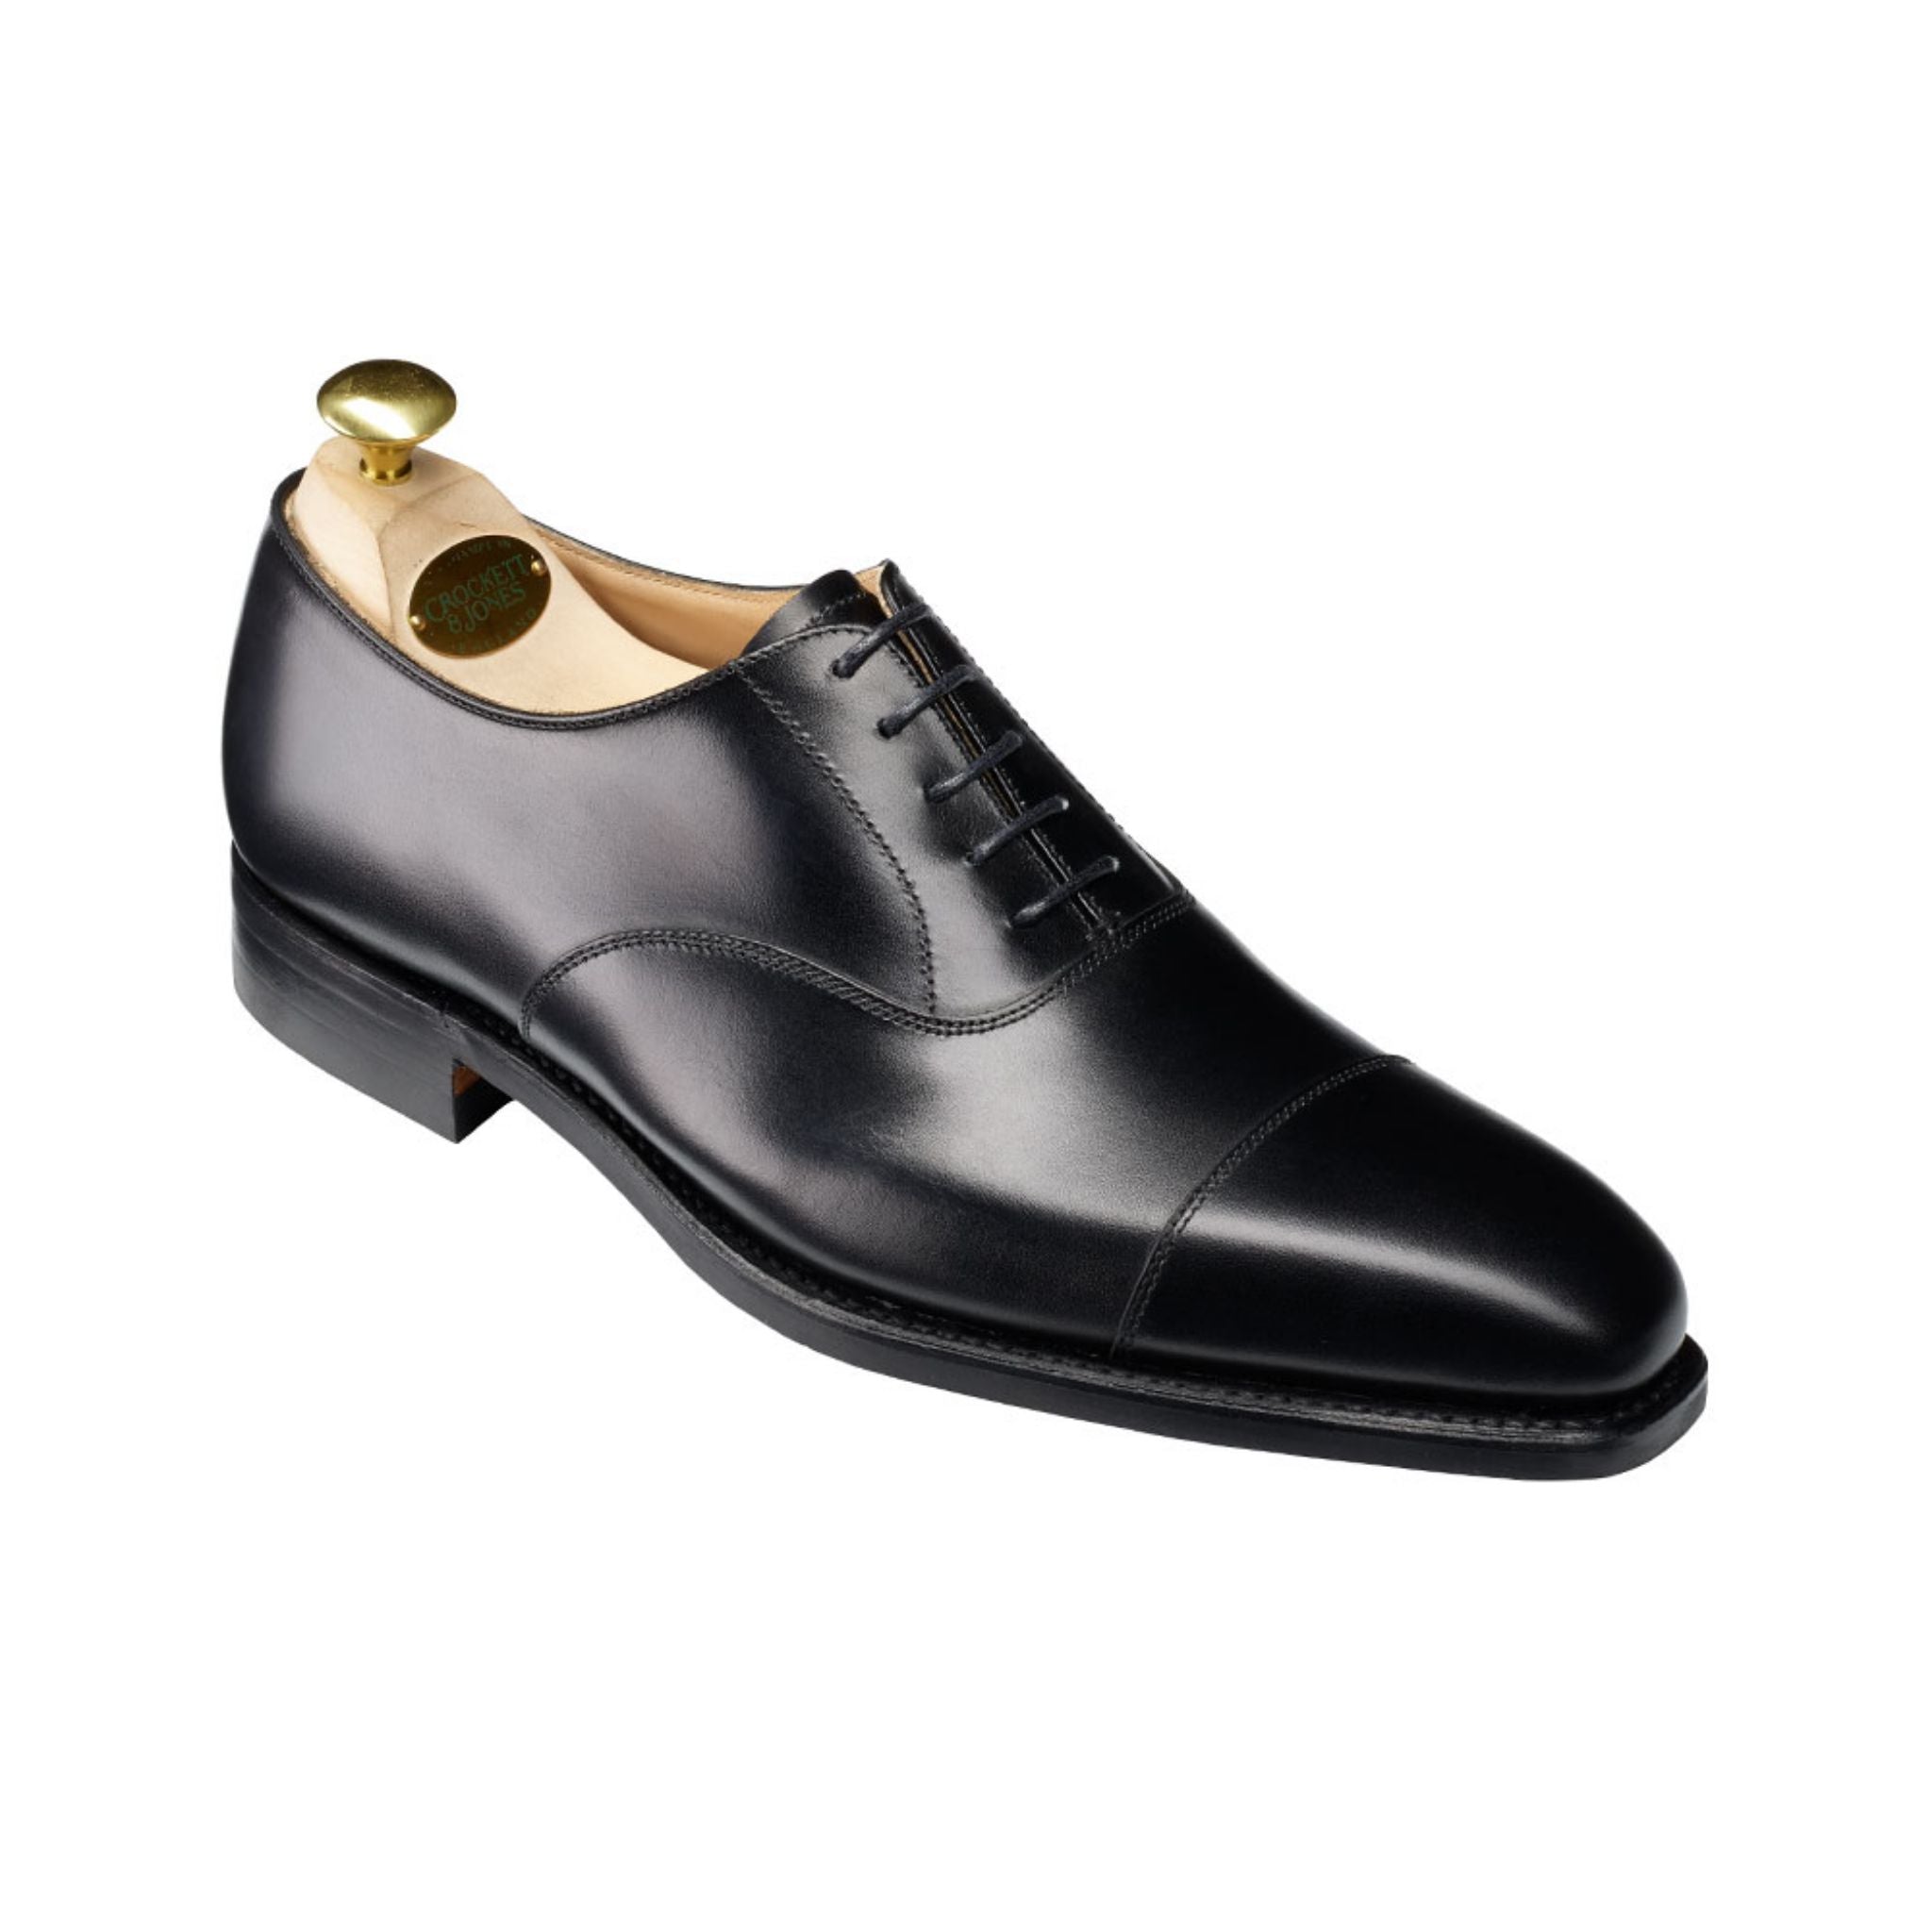 Black cap toe oxfords - 5 pairs to wear with suit -DressLikeA.com ...